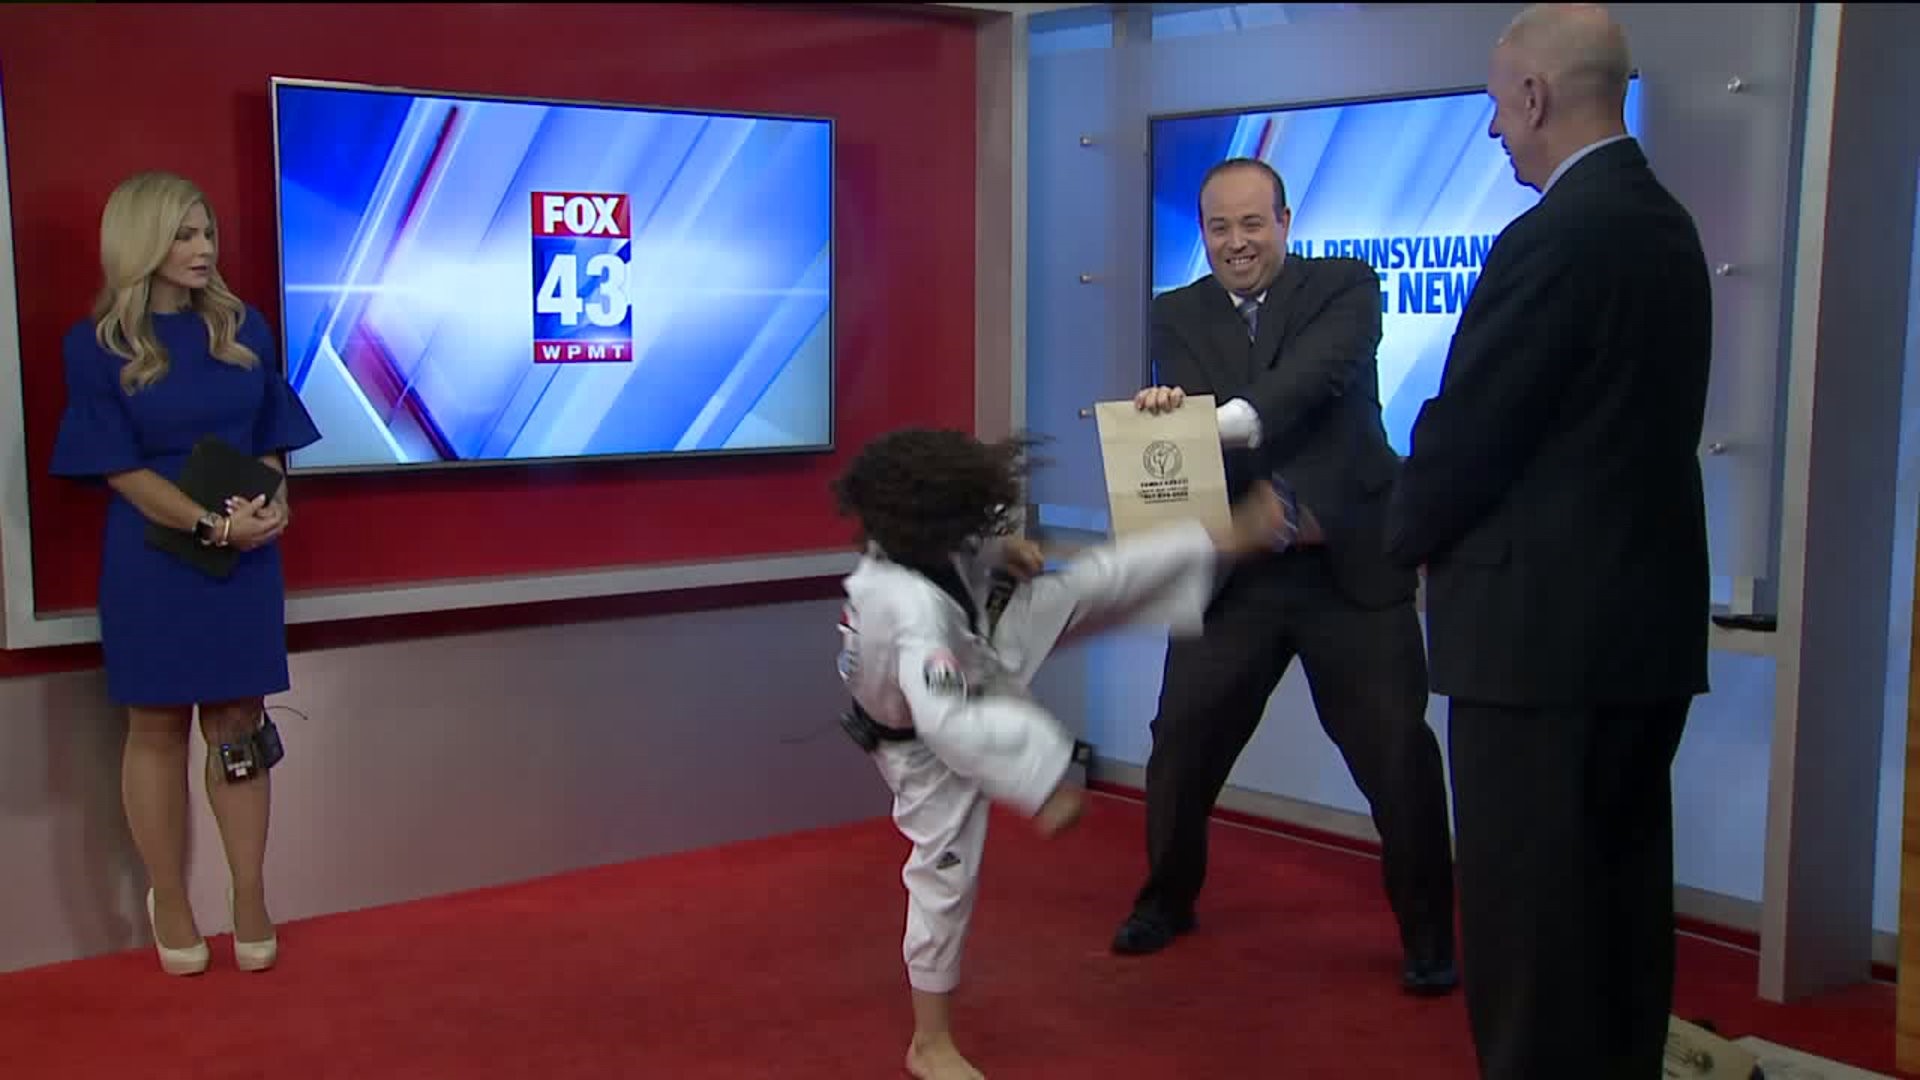 Lebanon County child masters taekwondo at age seven